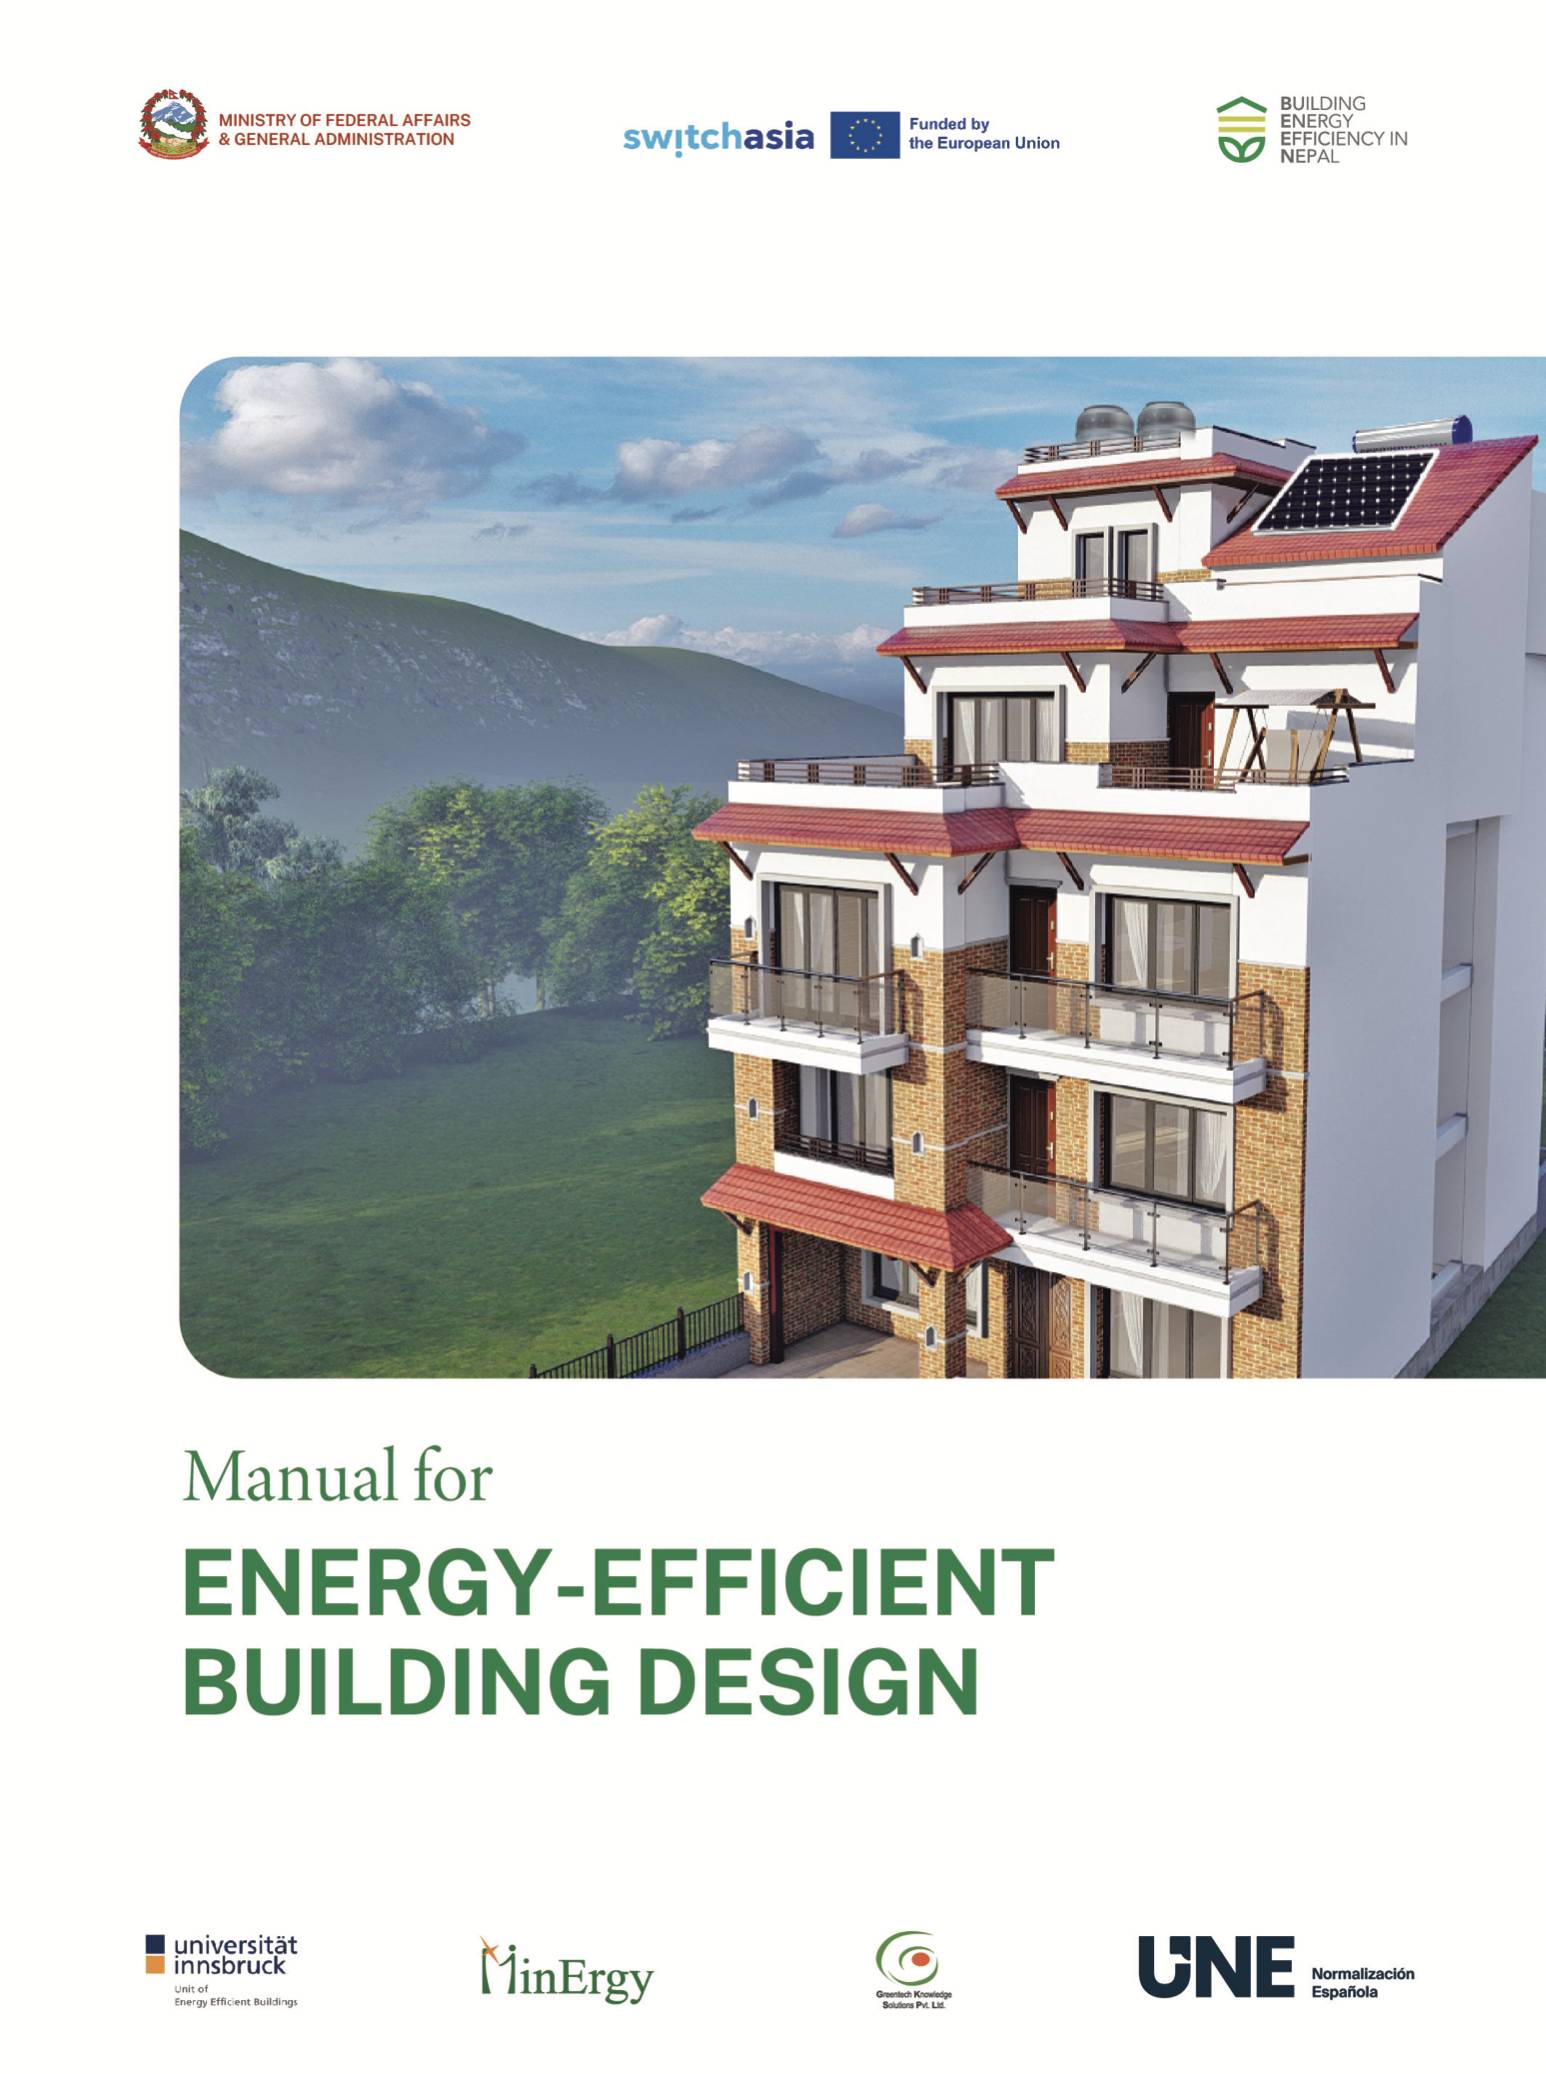 Manual for Energy-Efficient Building Design